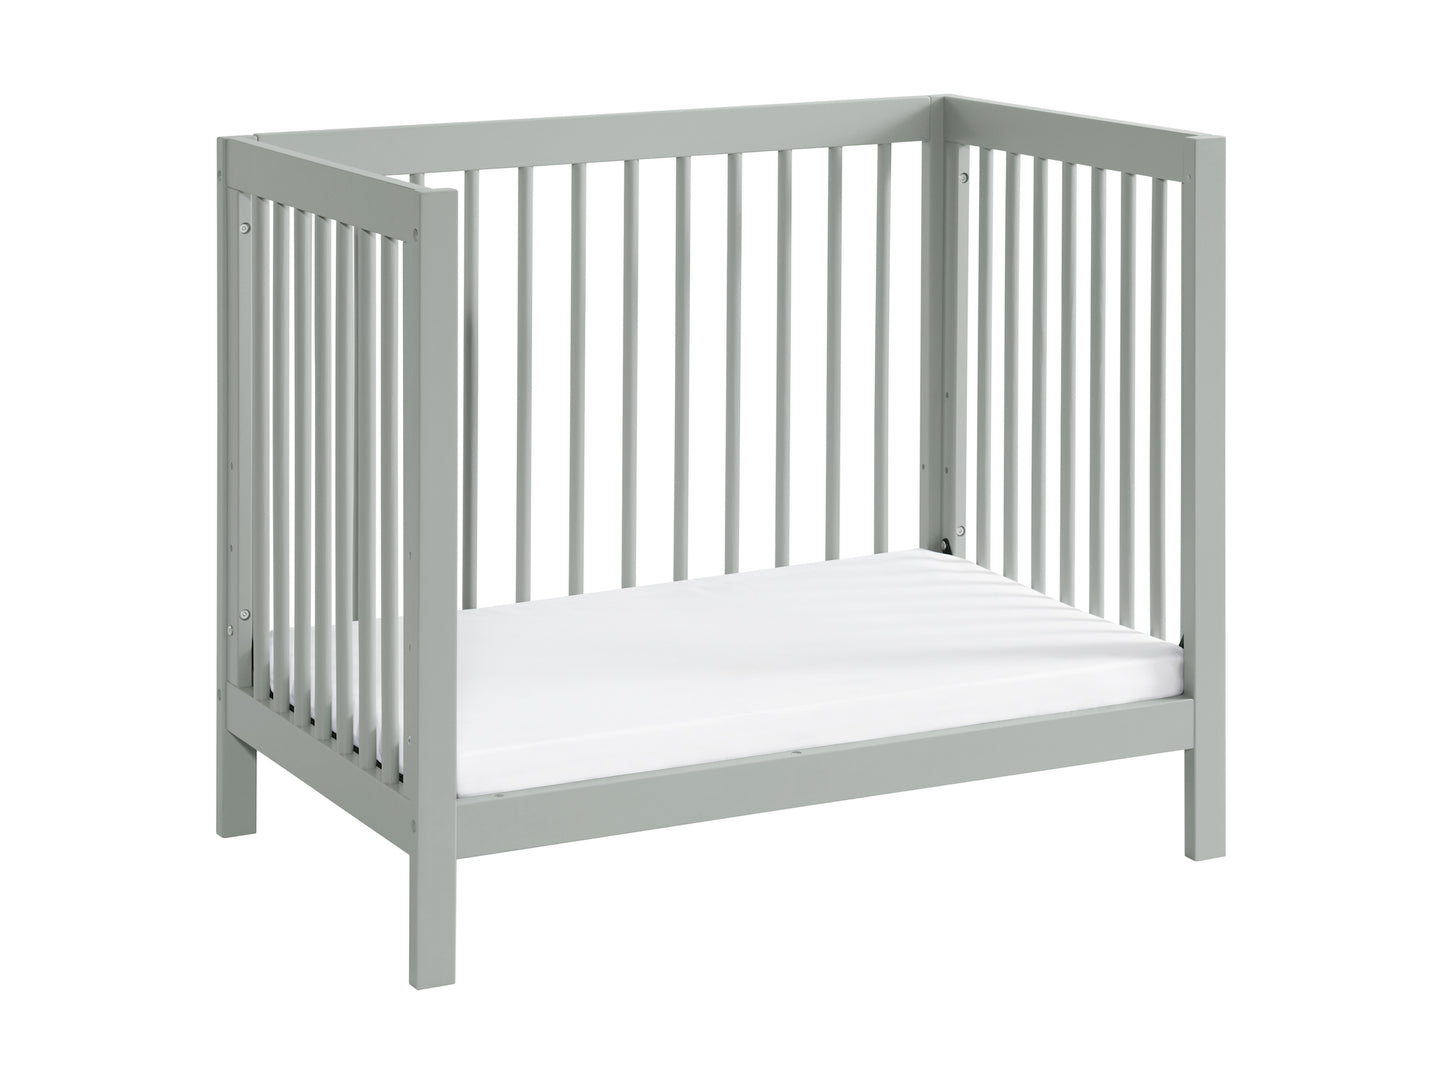 Essential Mini Convertible Crib